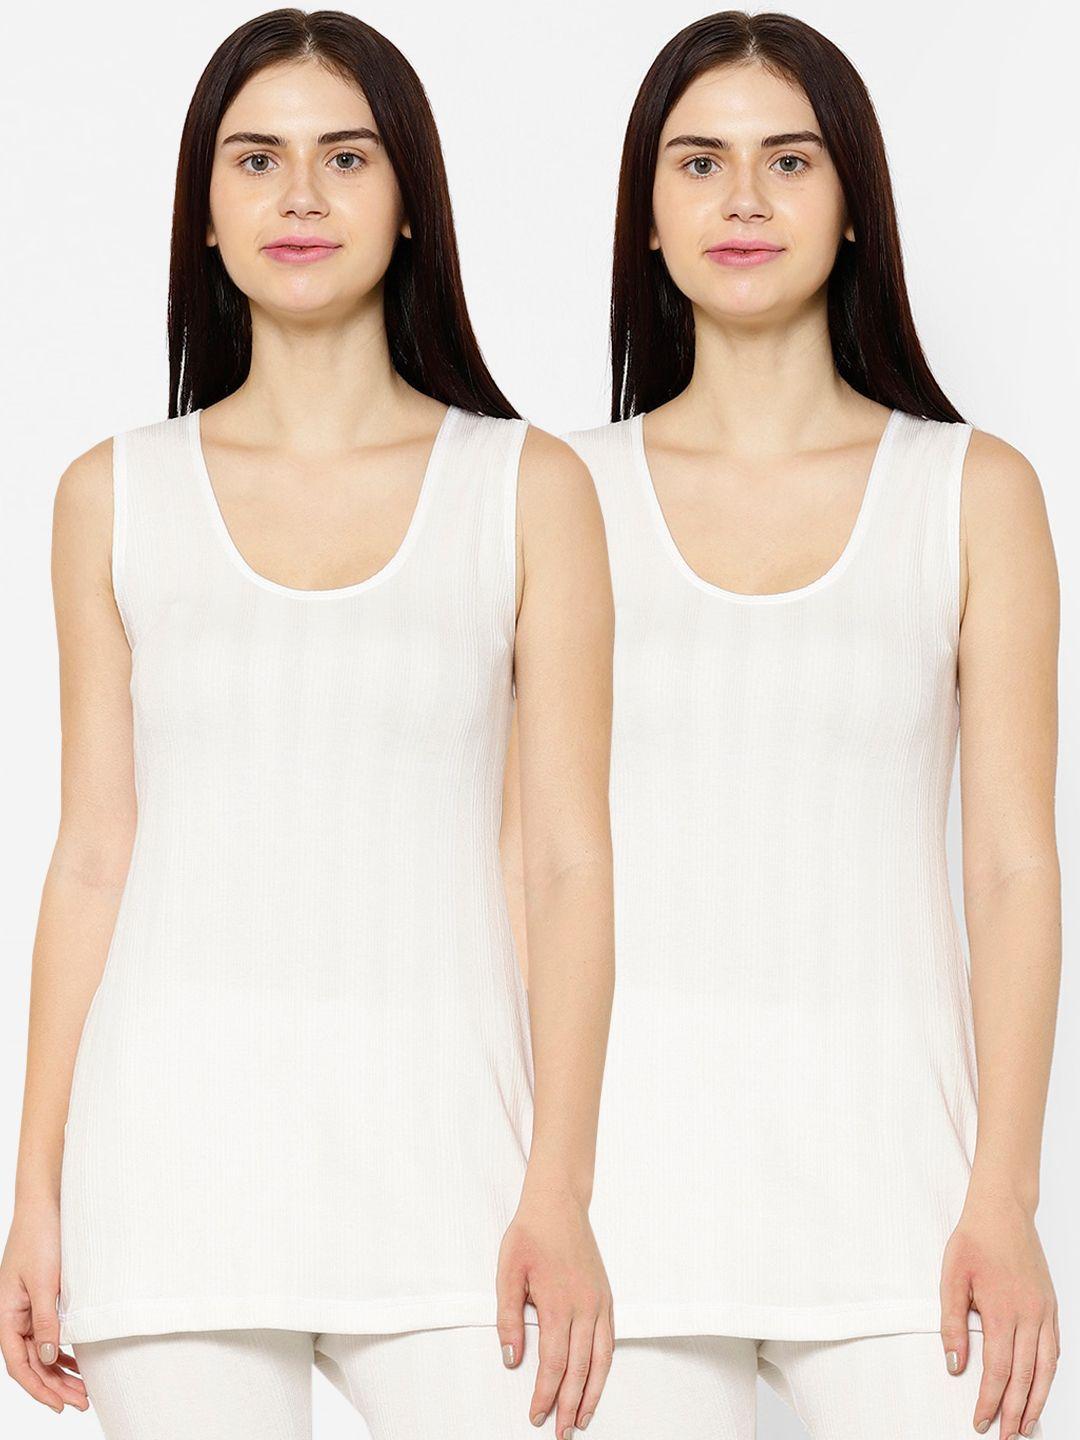 vimal-jonney-women-pack-of-2-white-striped-thermal-tops